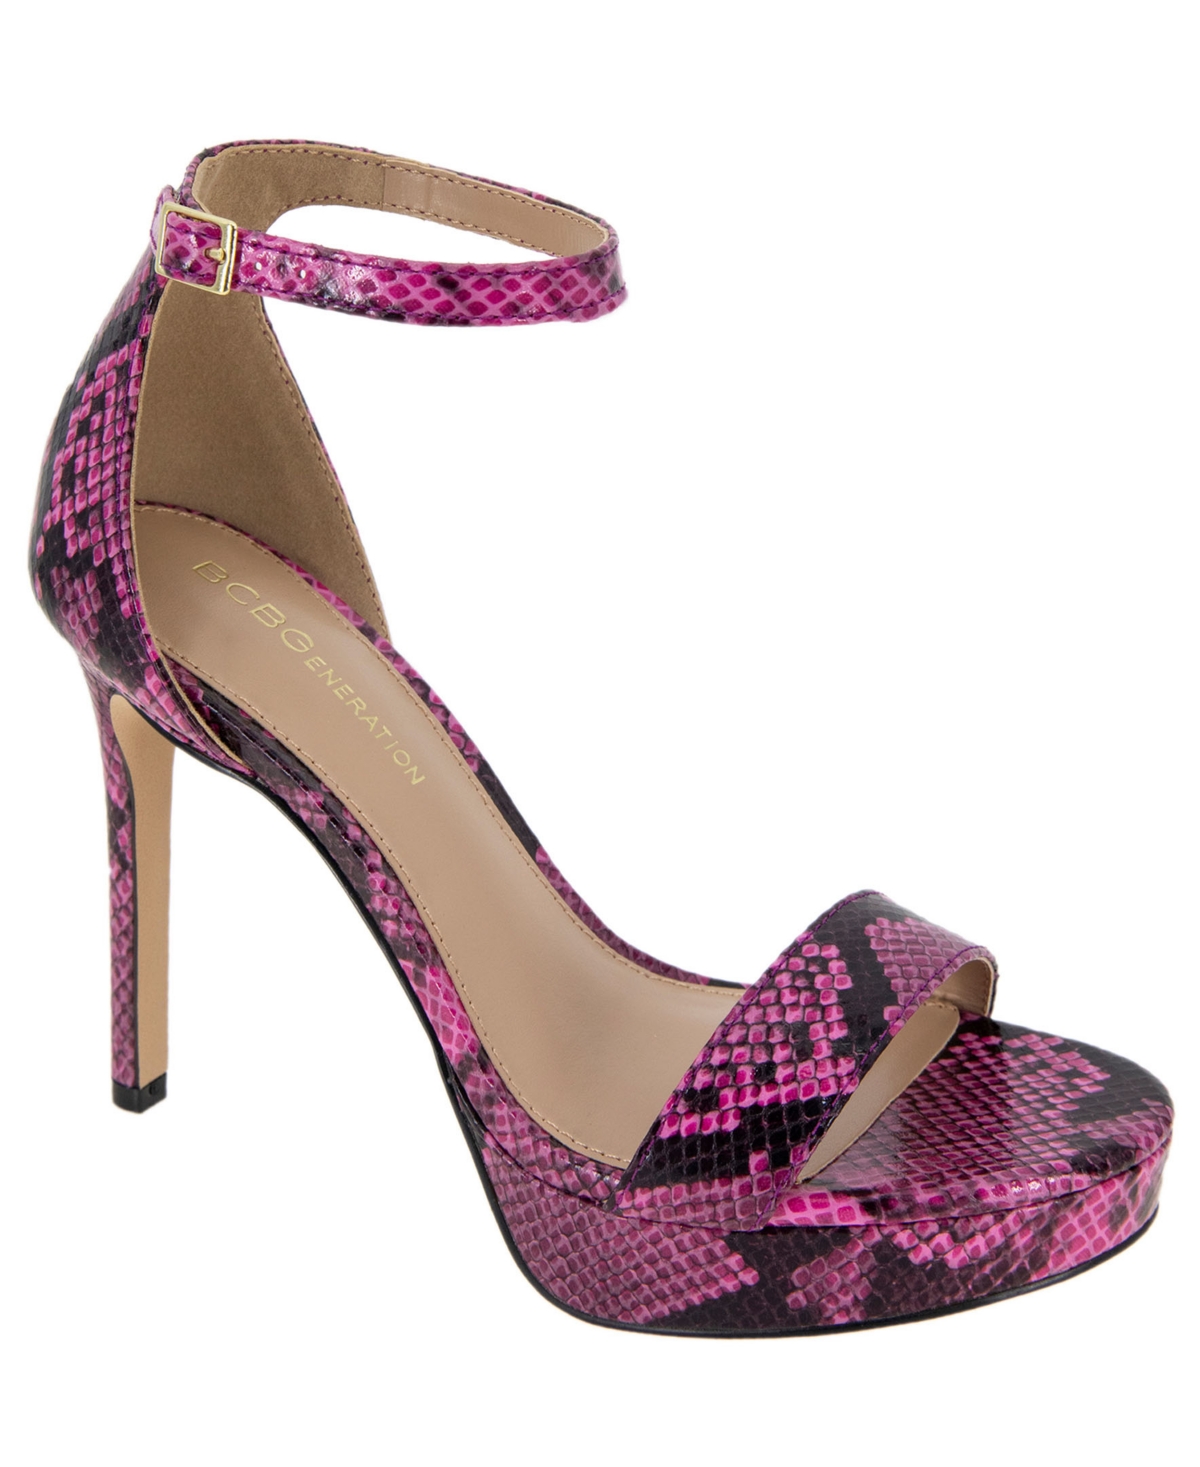 Women's Nallah Two-Piece Platform High-Heel Dress Sandals - Viva Pink Snake